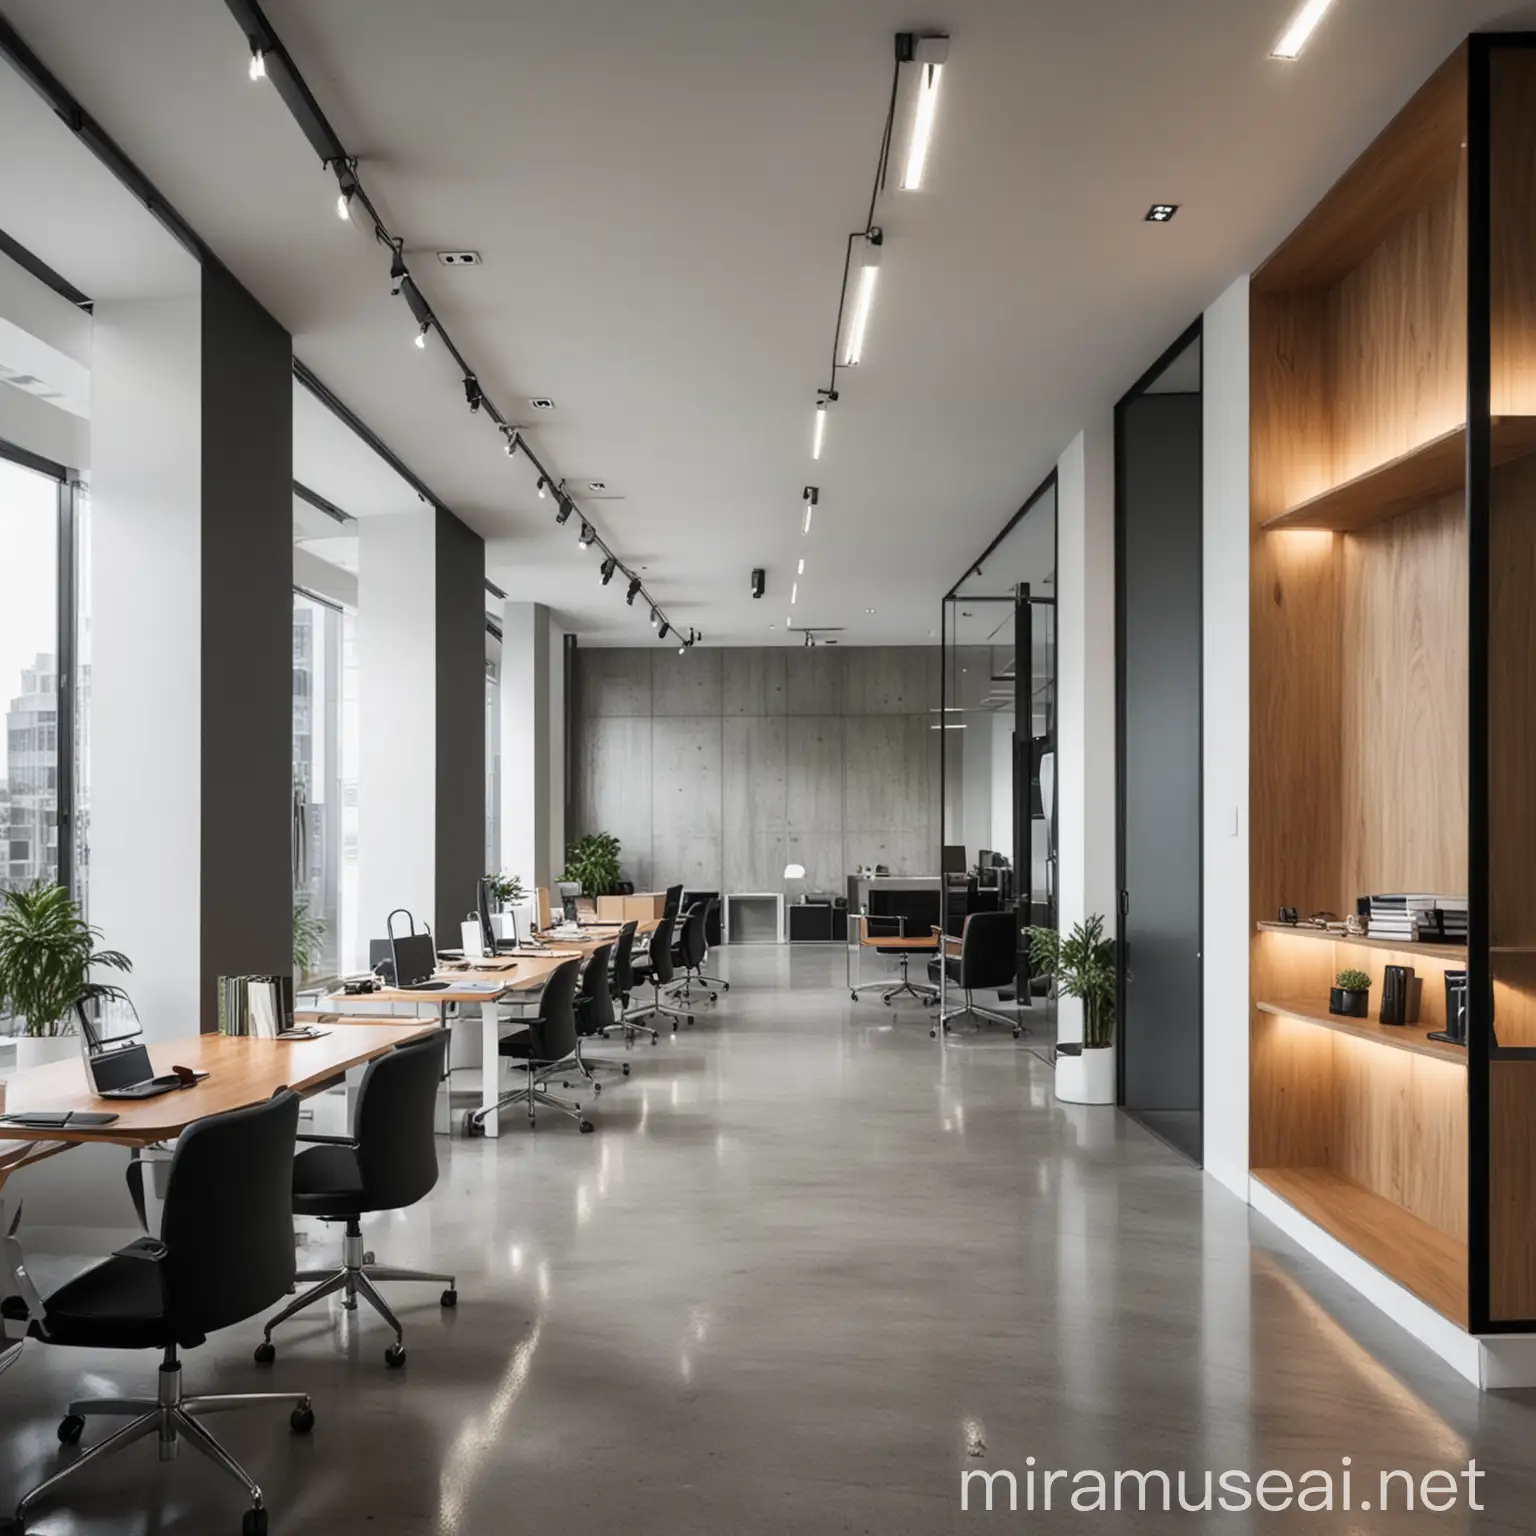 Contemporary Office Interior Design with Minimalist Decor